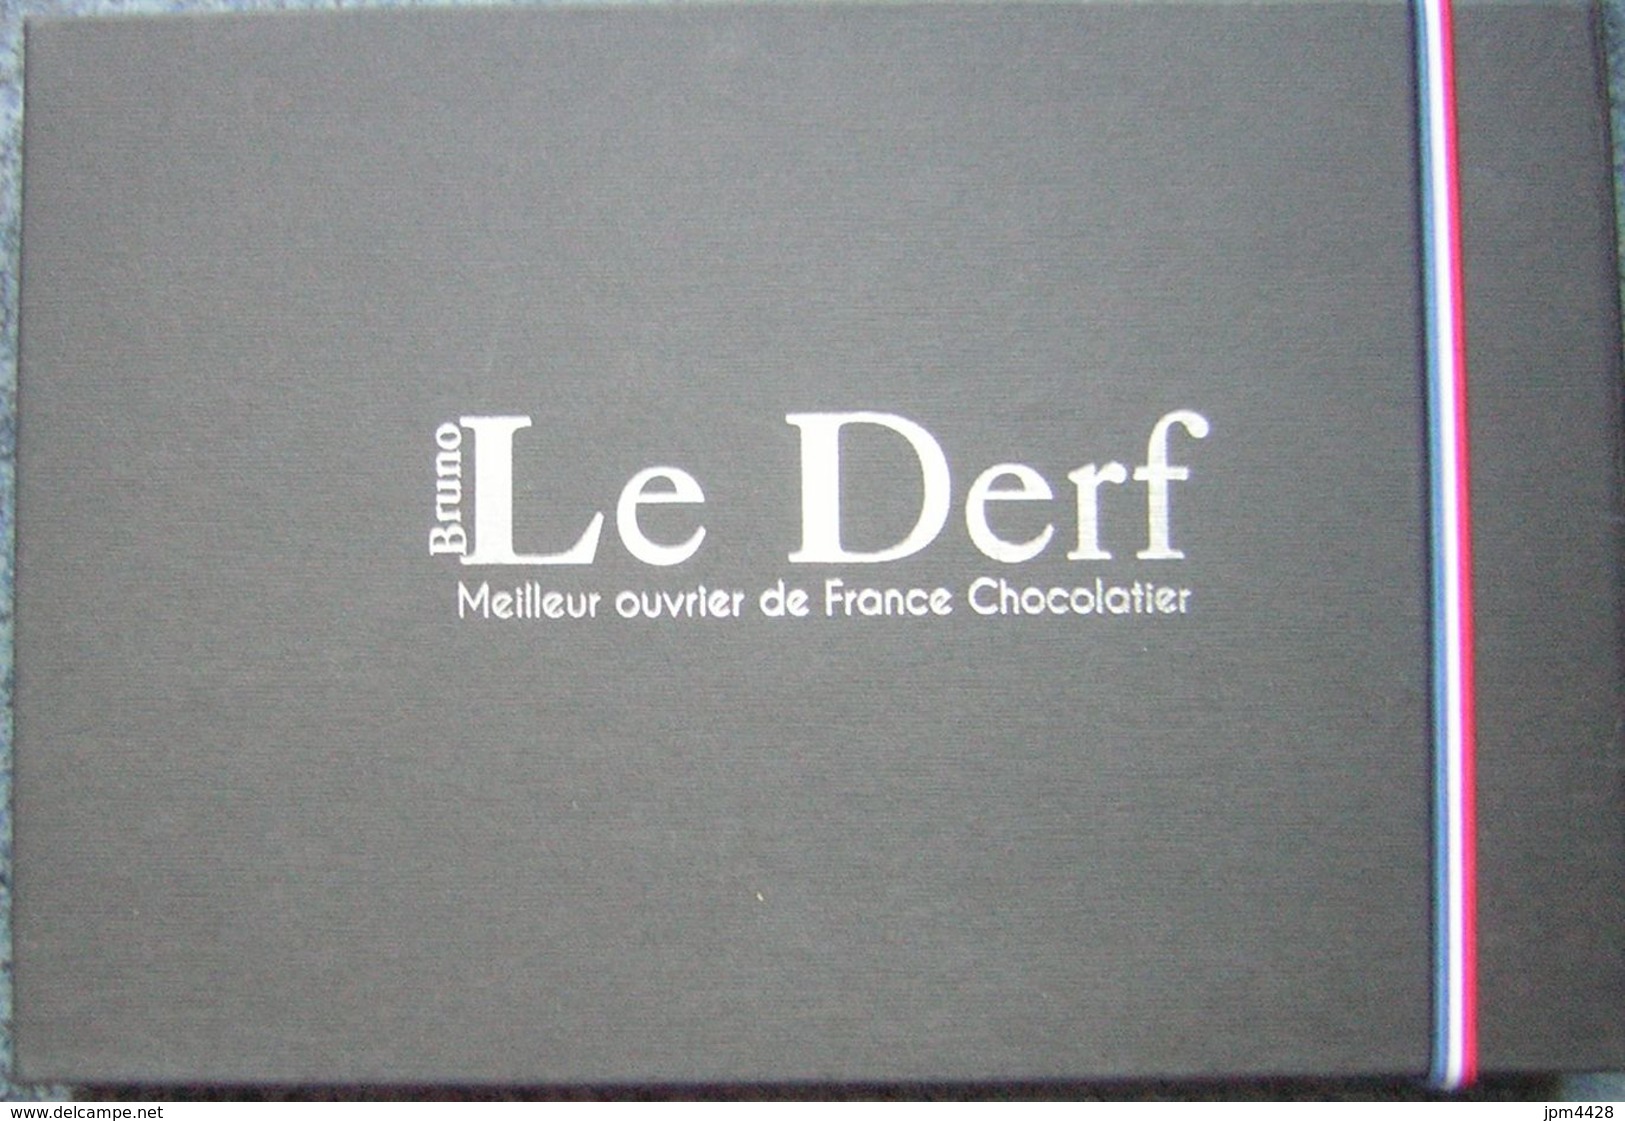 Boite En Carton 25.0x16,8x2.8 Cm - Emballage Bruno Le Derf  Façon Coffret -Chocolatier - Théme Tabac Cigare - Boîtes